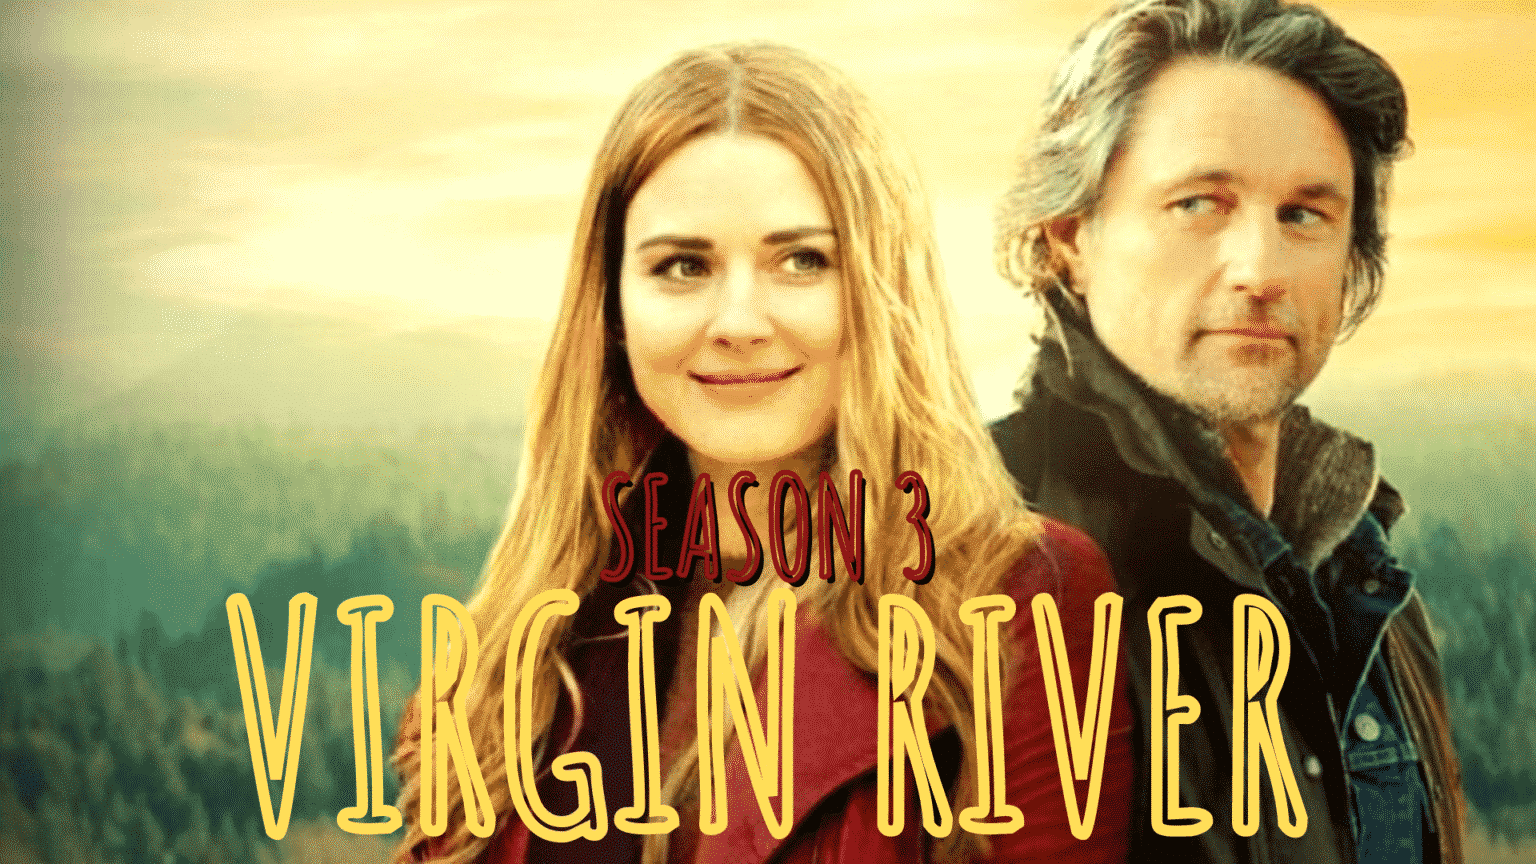 virgin river cast season 3